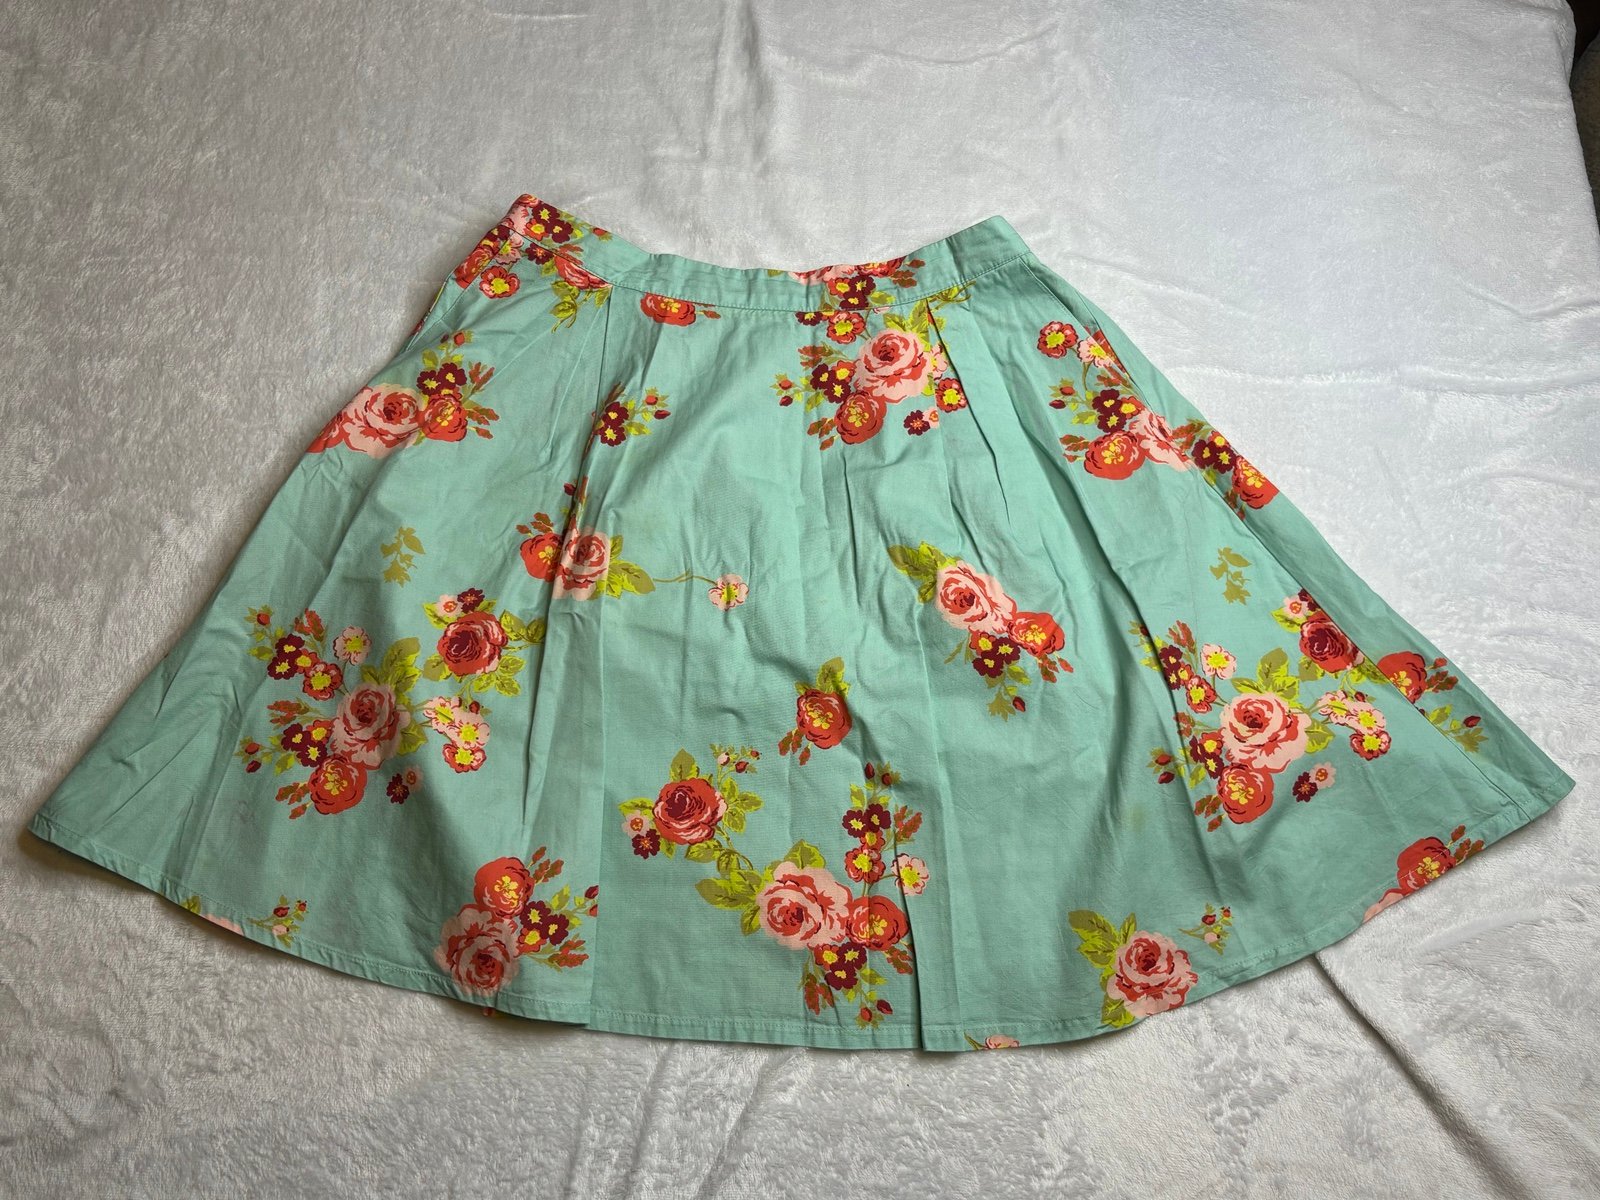 save up to 70% Matilda Jane Floral Skirt L pqxrzZWvZ Cool